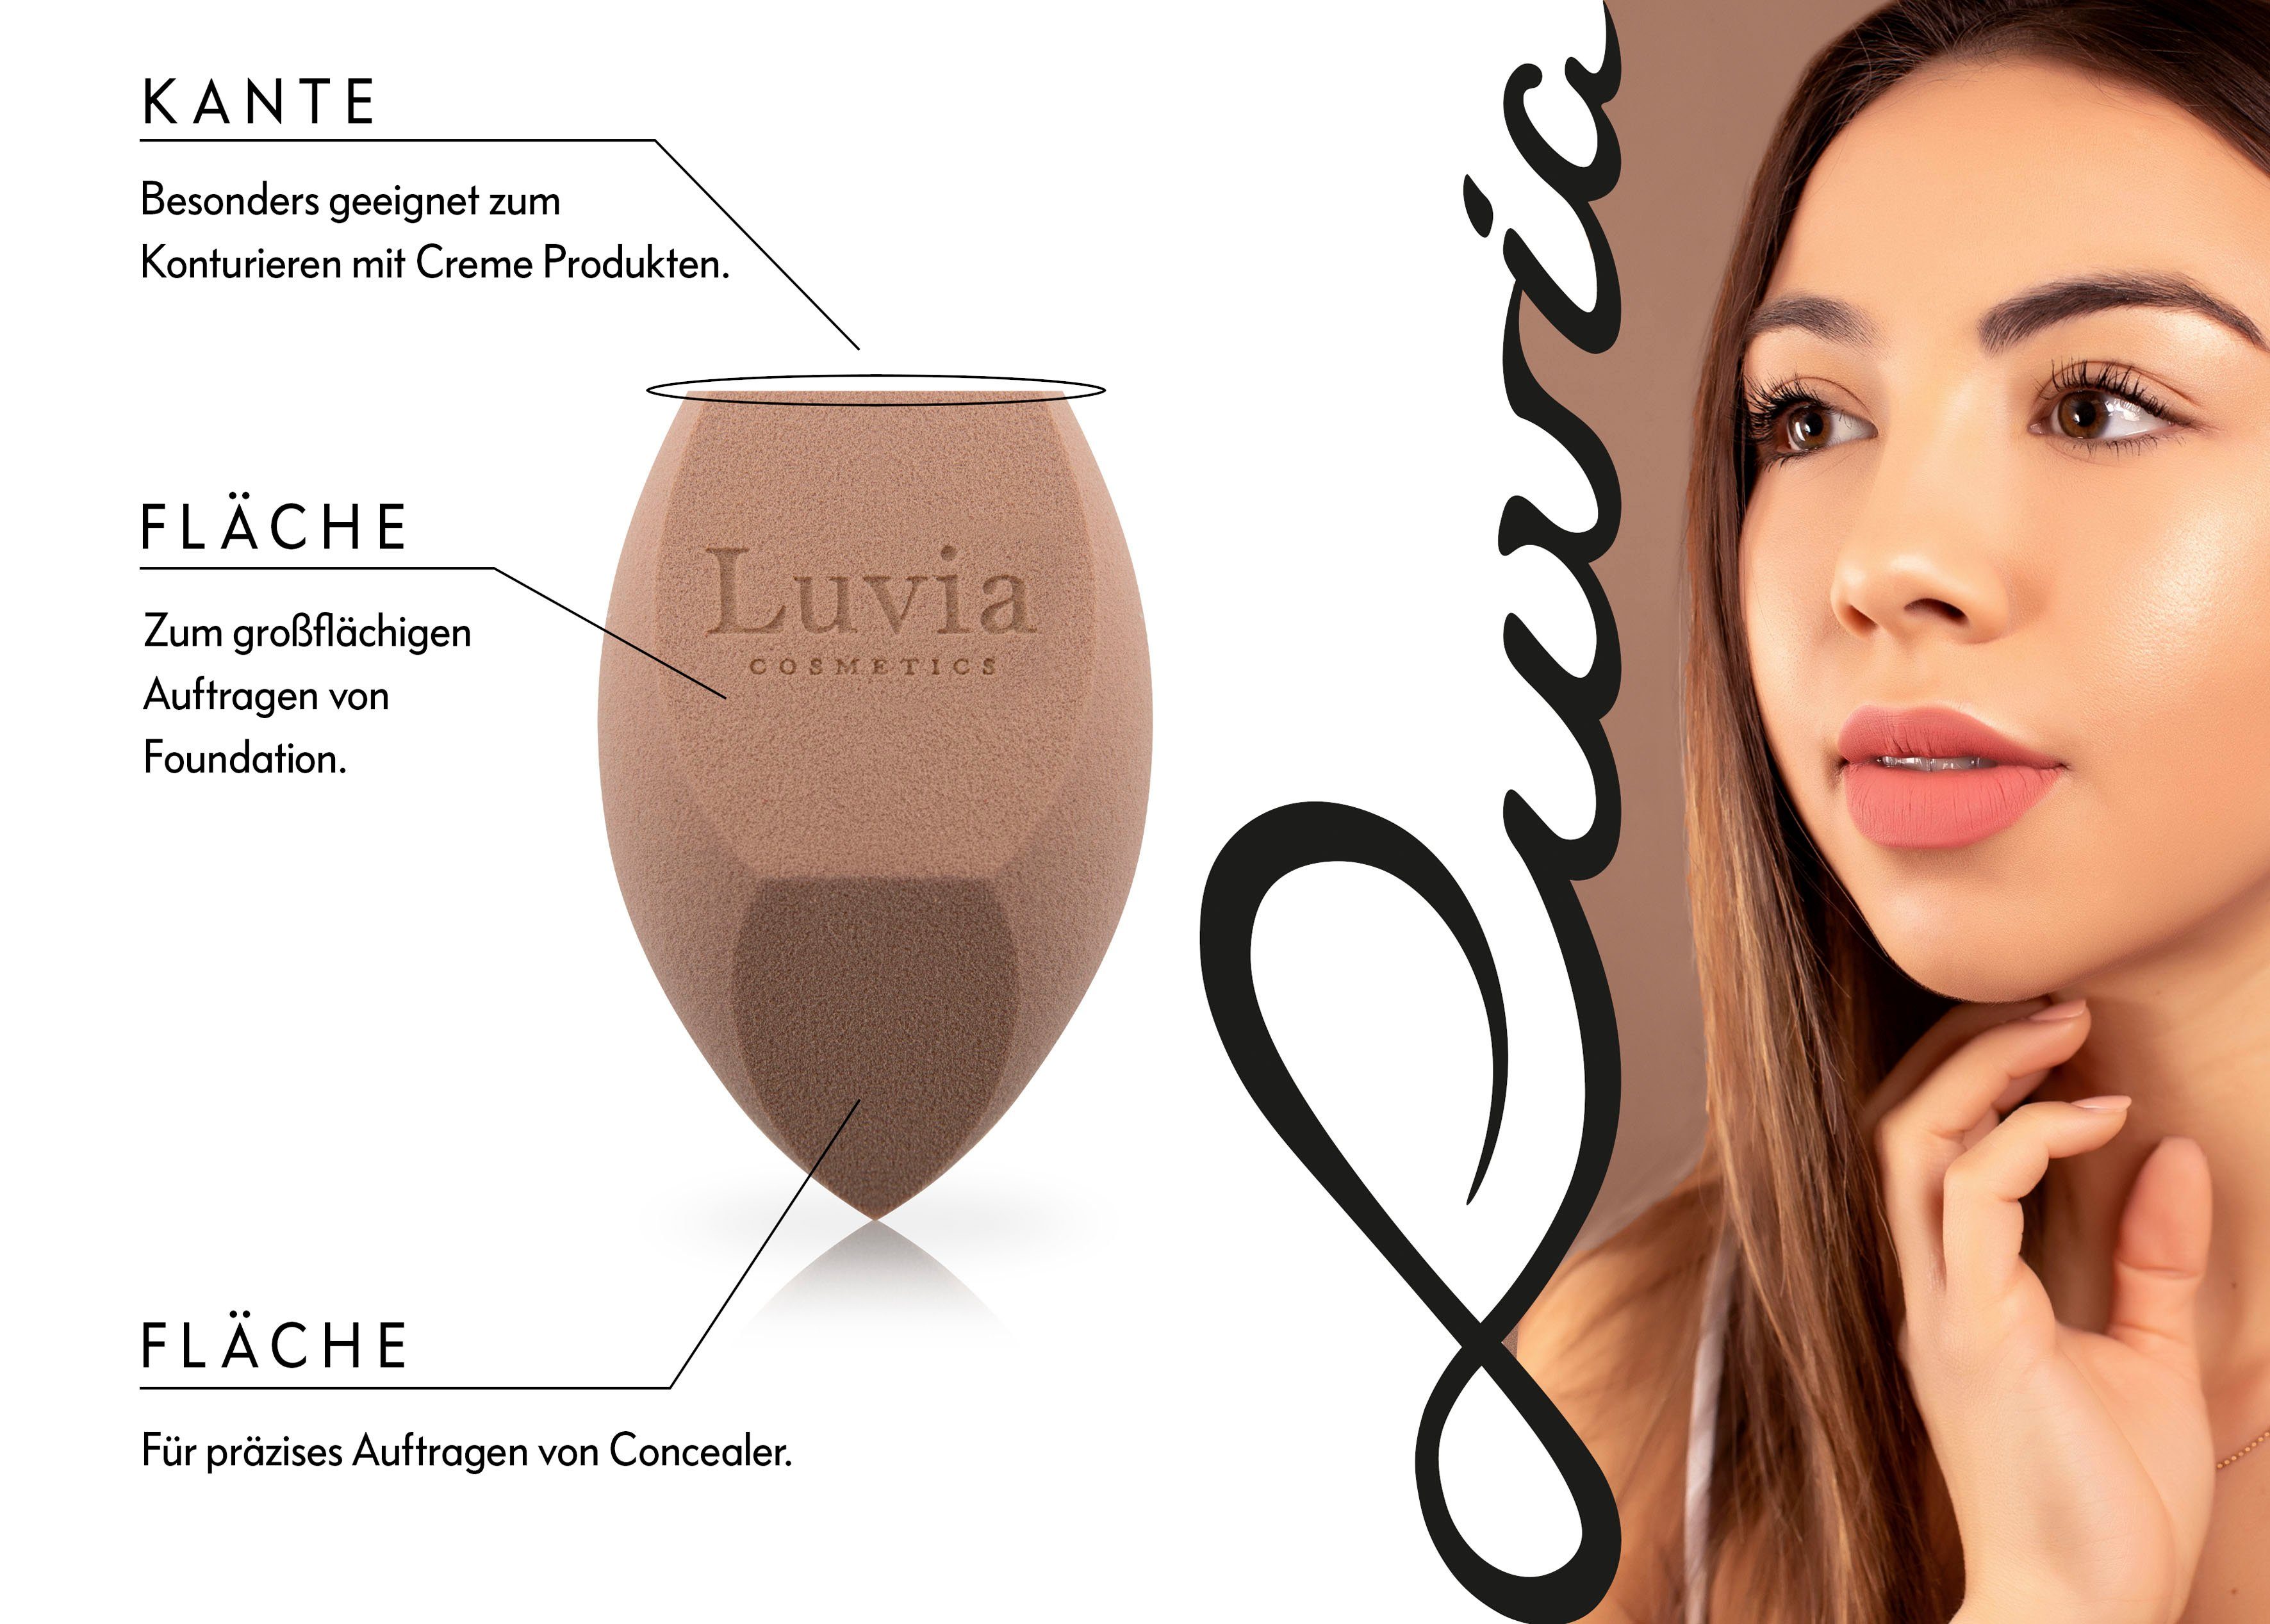 Luvia Cosmetics Schwamm Schwamm Vegan Make-up Body Prime Make-up Sponge, XXL